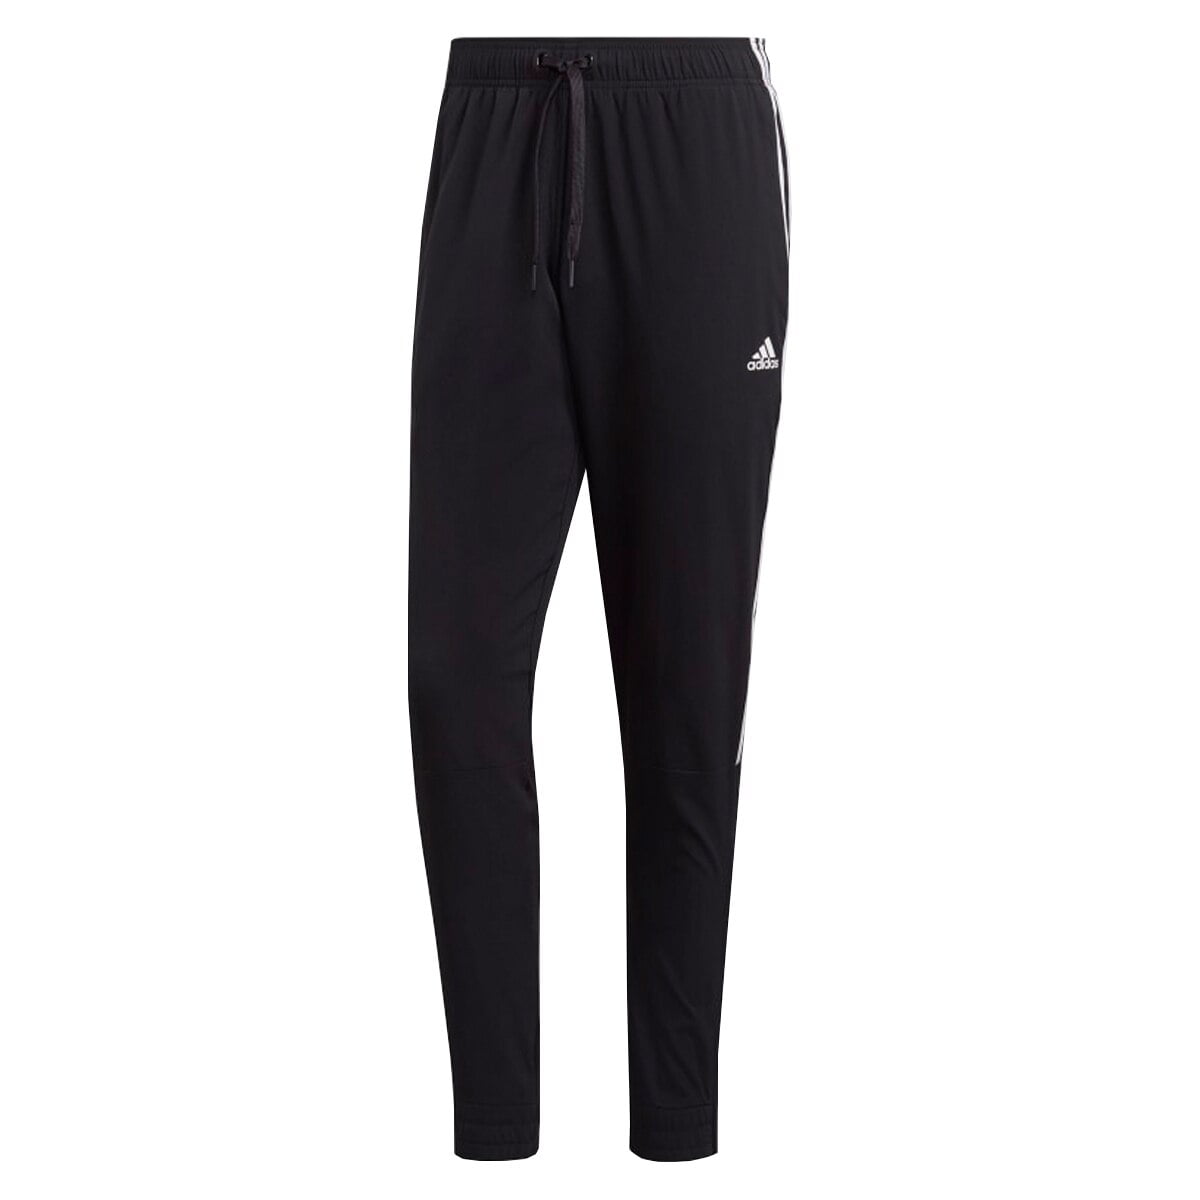 Adidas Sport ID Tiro Men's Pants DQ1475 - Black, White - Walmart.com